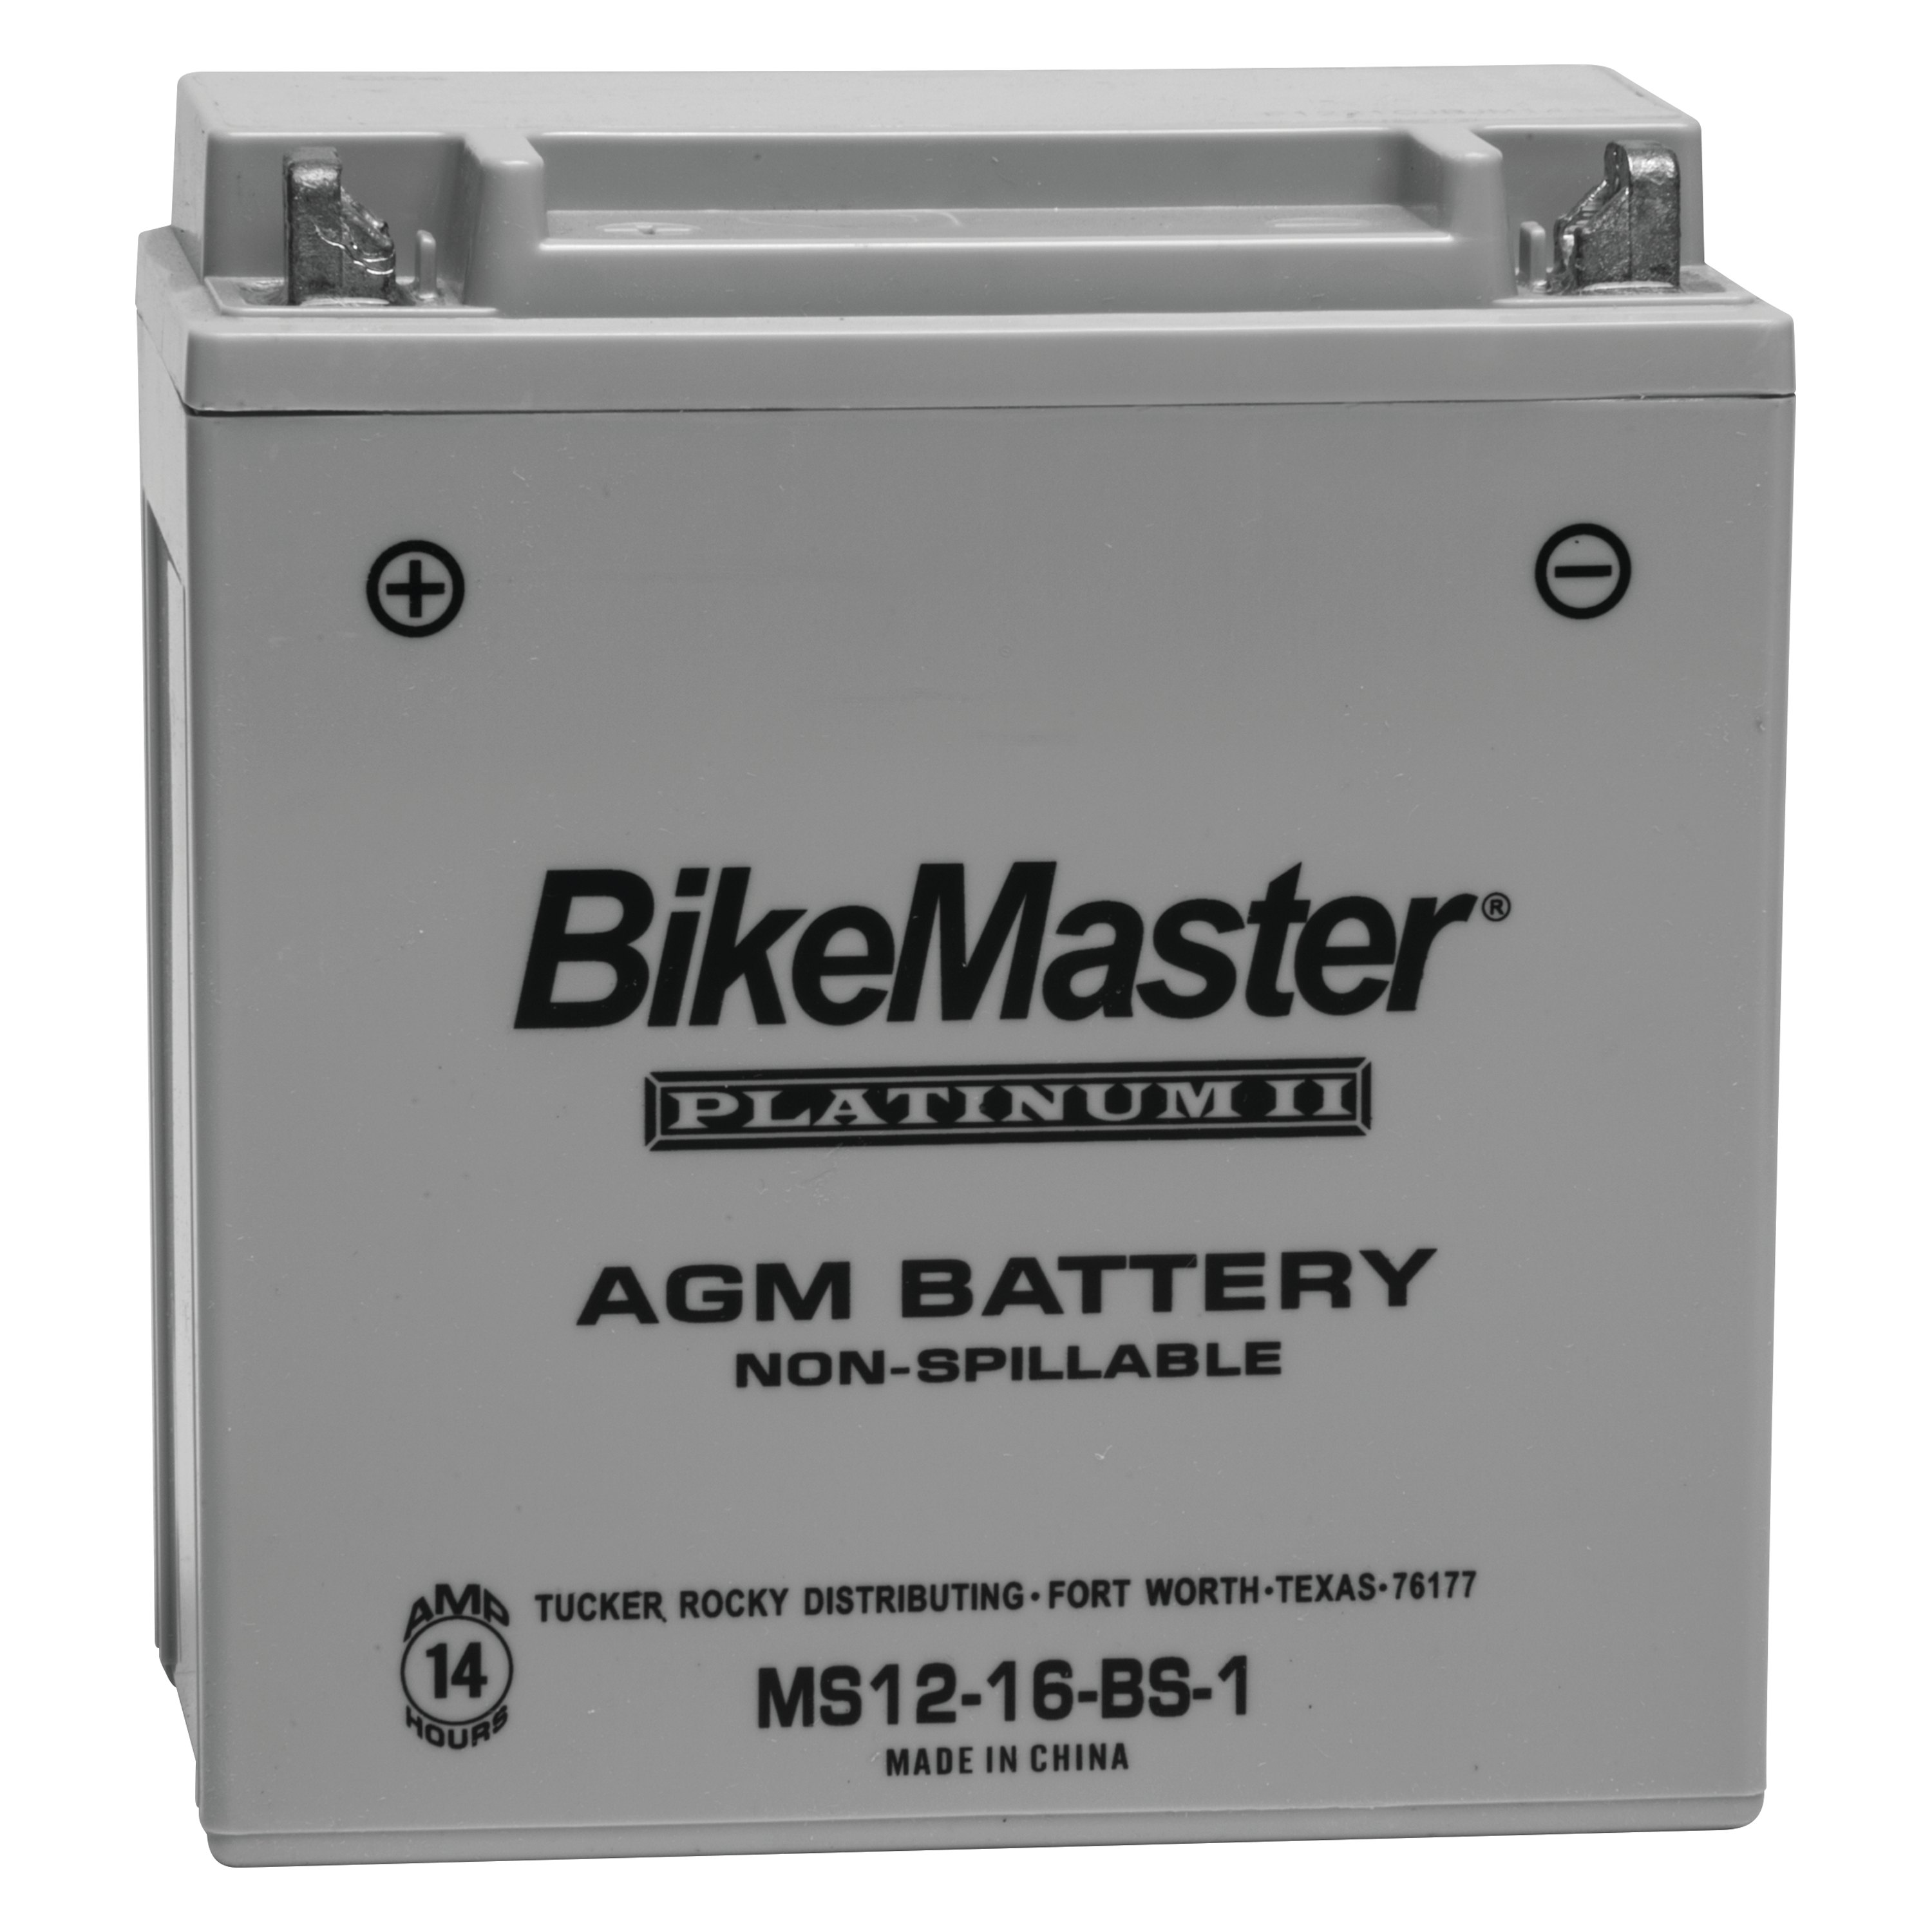 K 2 battery. AGM. Батарея Grepow grp7051071 3050 mau. Suzuki Battery. AGM аккумулятор молнии.